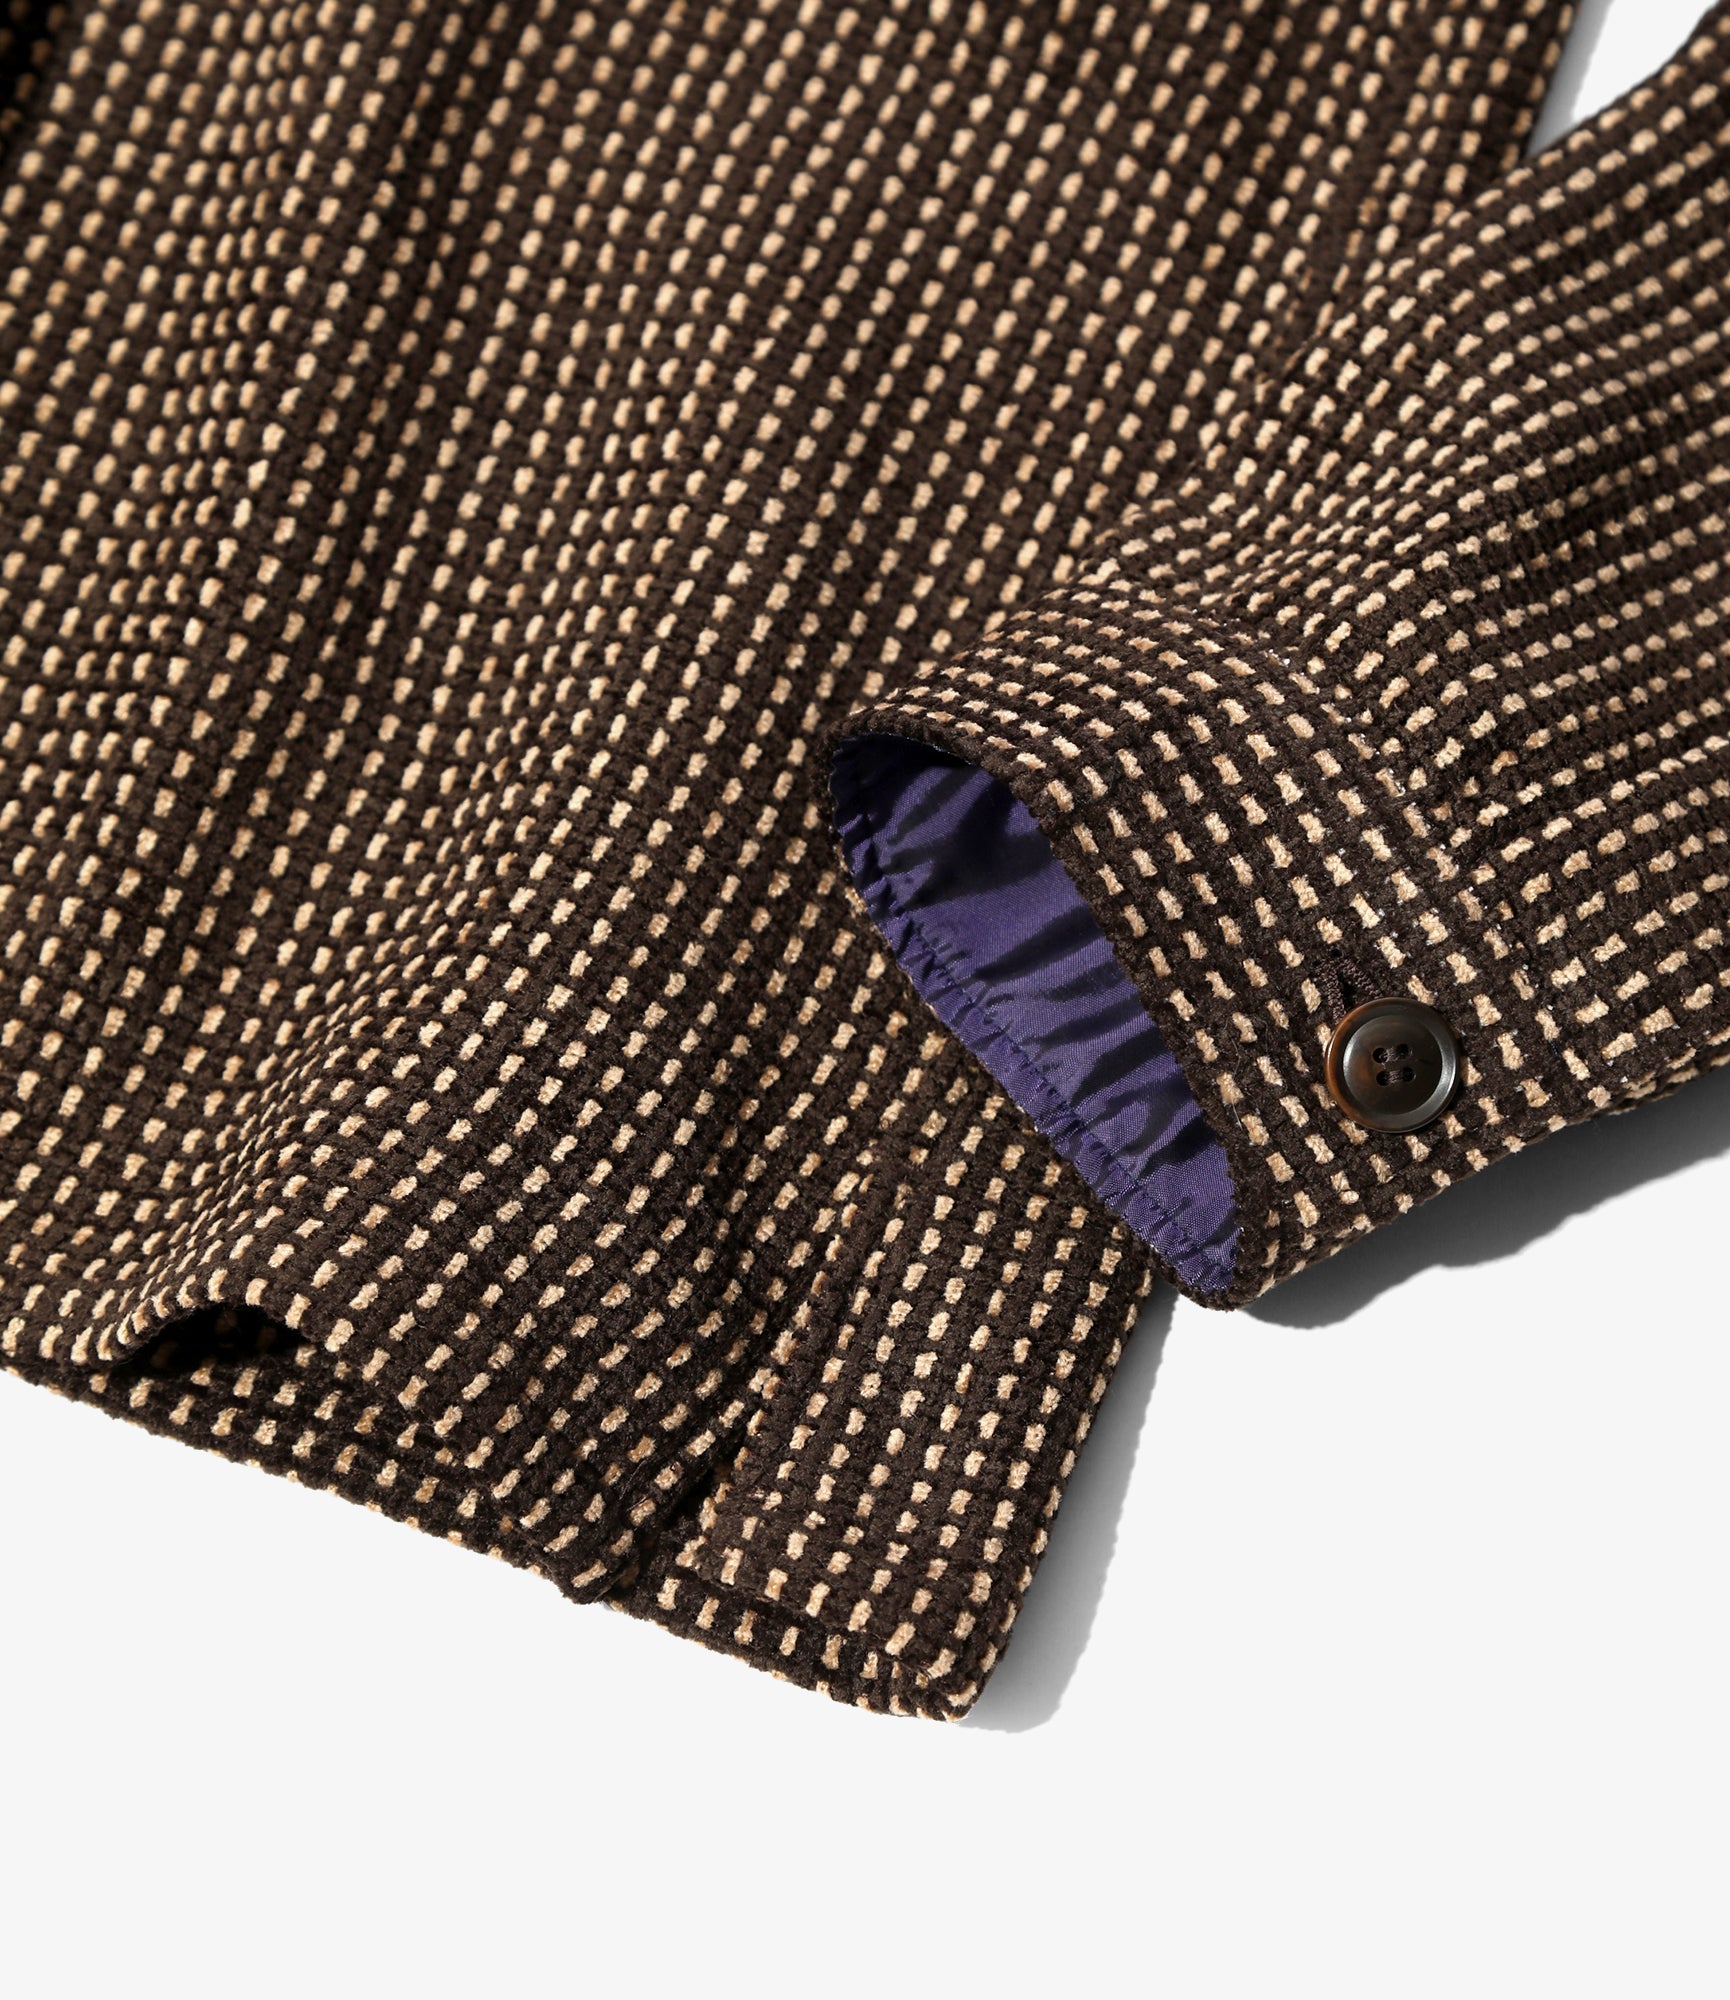 Smokey Shirt - Brown - AC/PE/W Mall Cloth